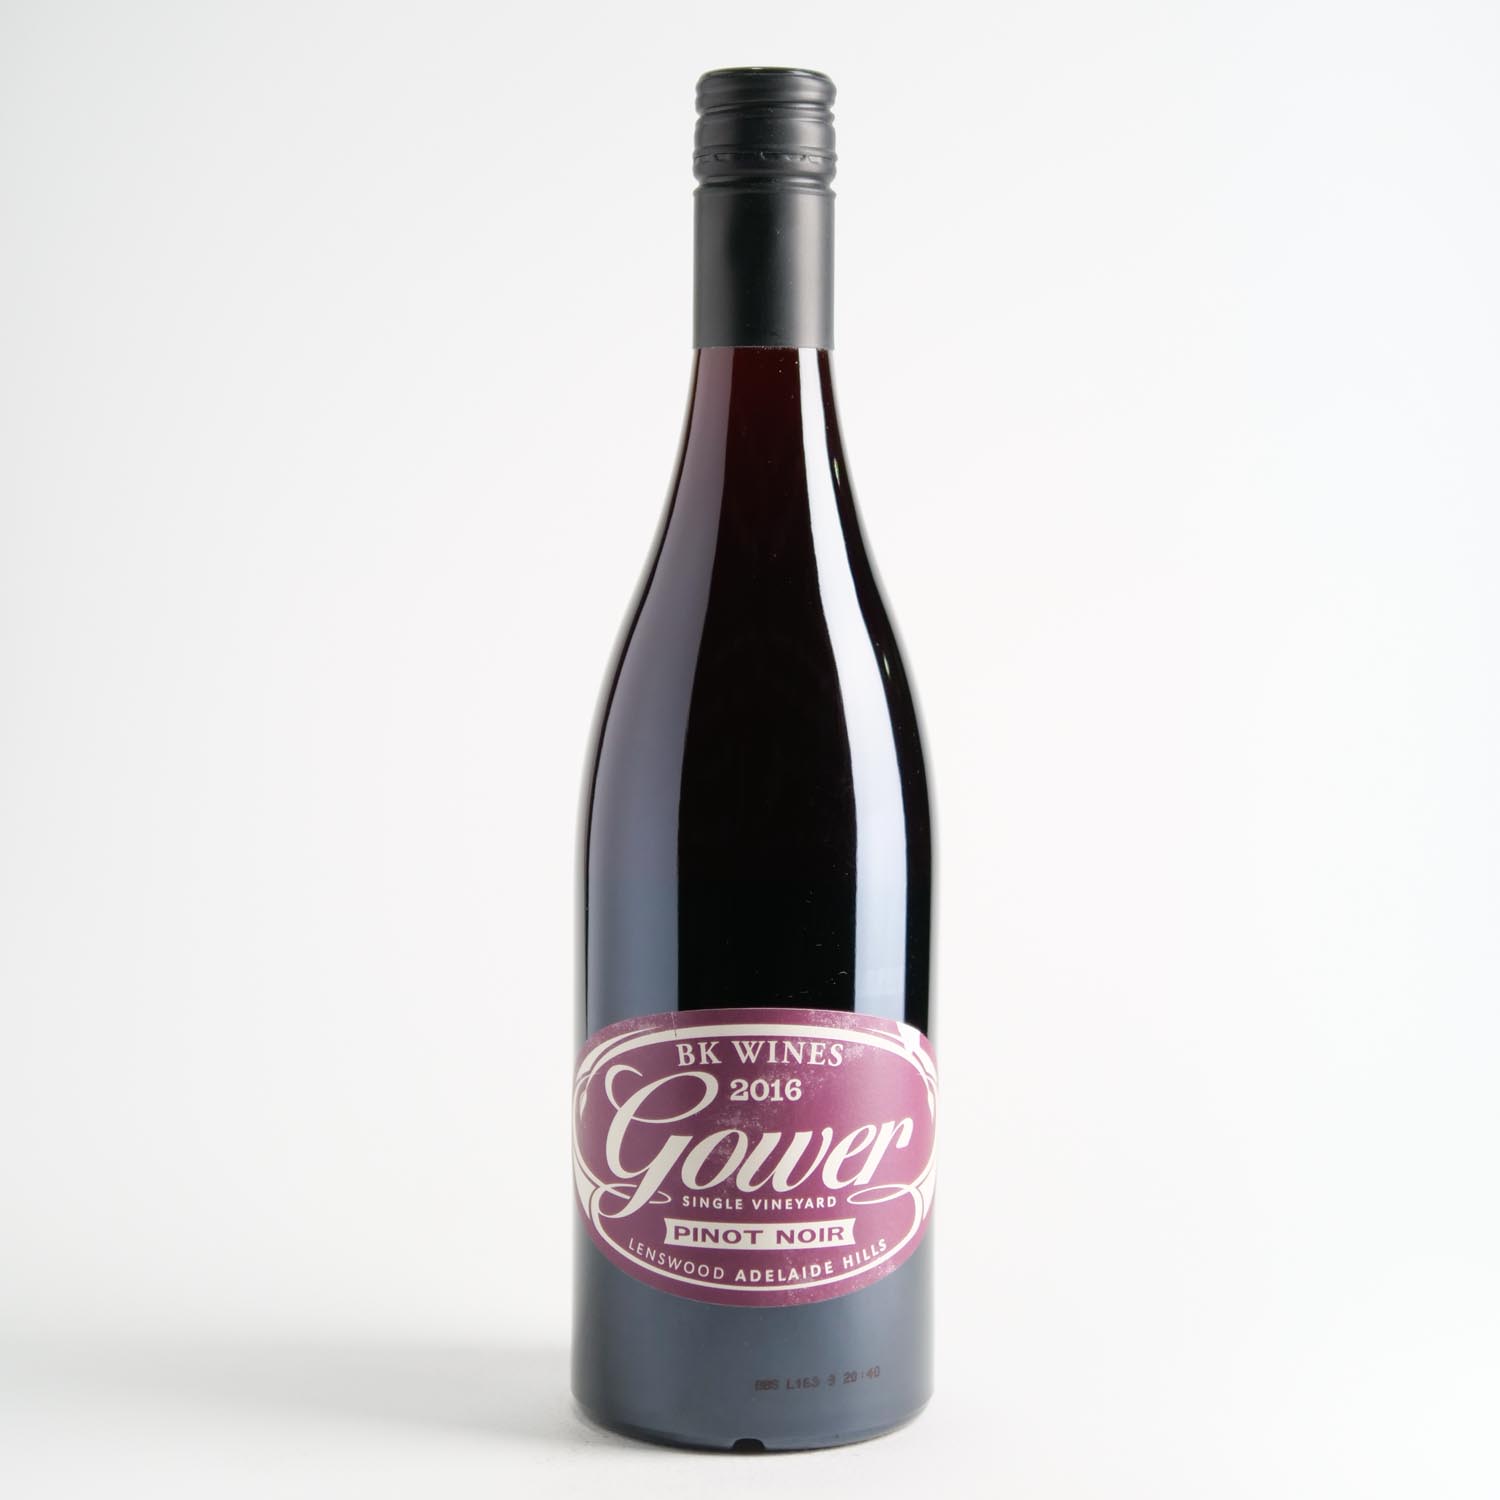 Bk Wines Gower Pinot Noir 2016